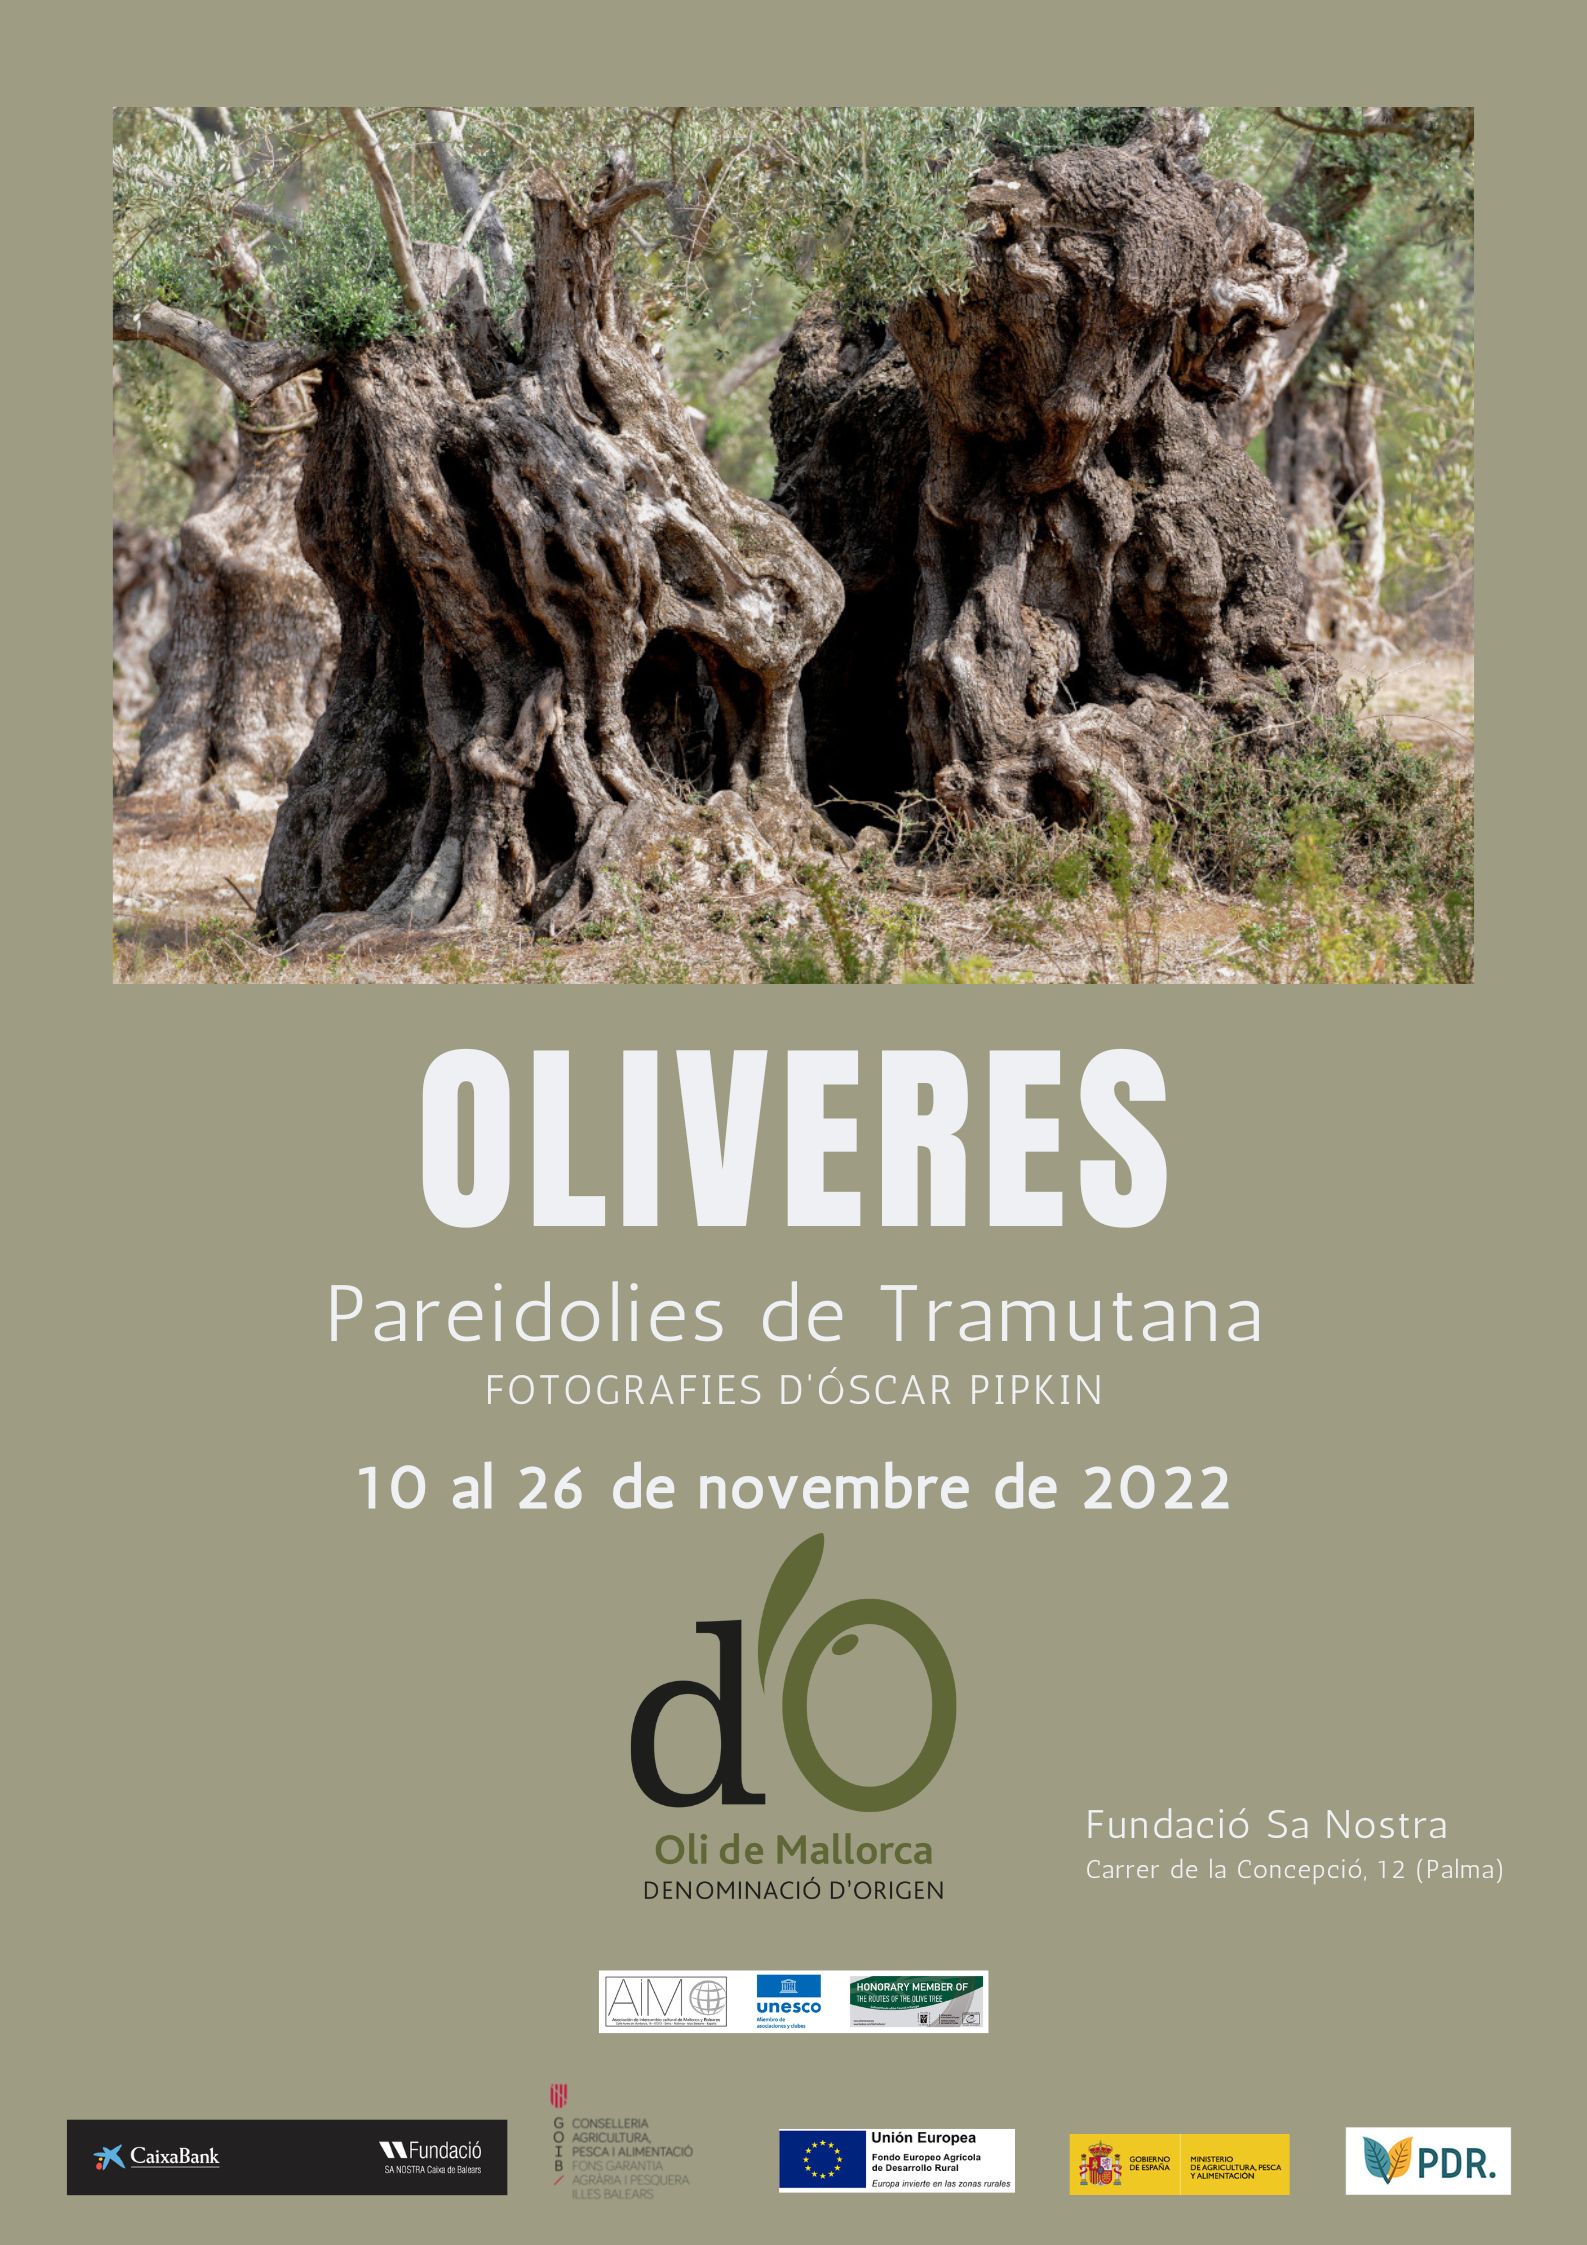 Oli de Mallorca presenta "Oliveres. Pareidolies de Tramuntana" de Óscar Pipkin - Notícies - Illes Balears - Productes agroalimentaris, denominacions d'origen i gastronomia balear